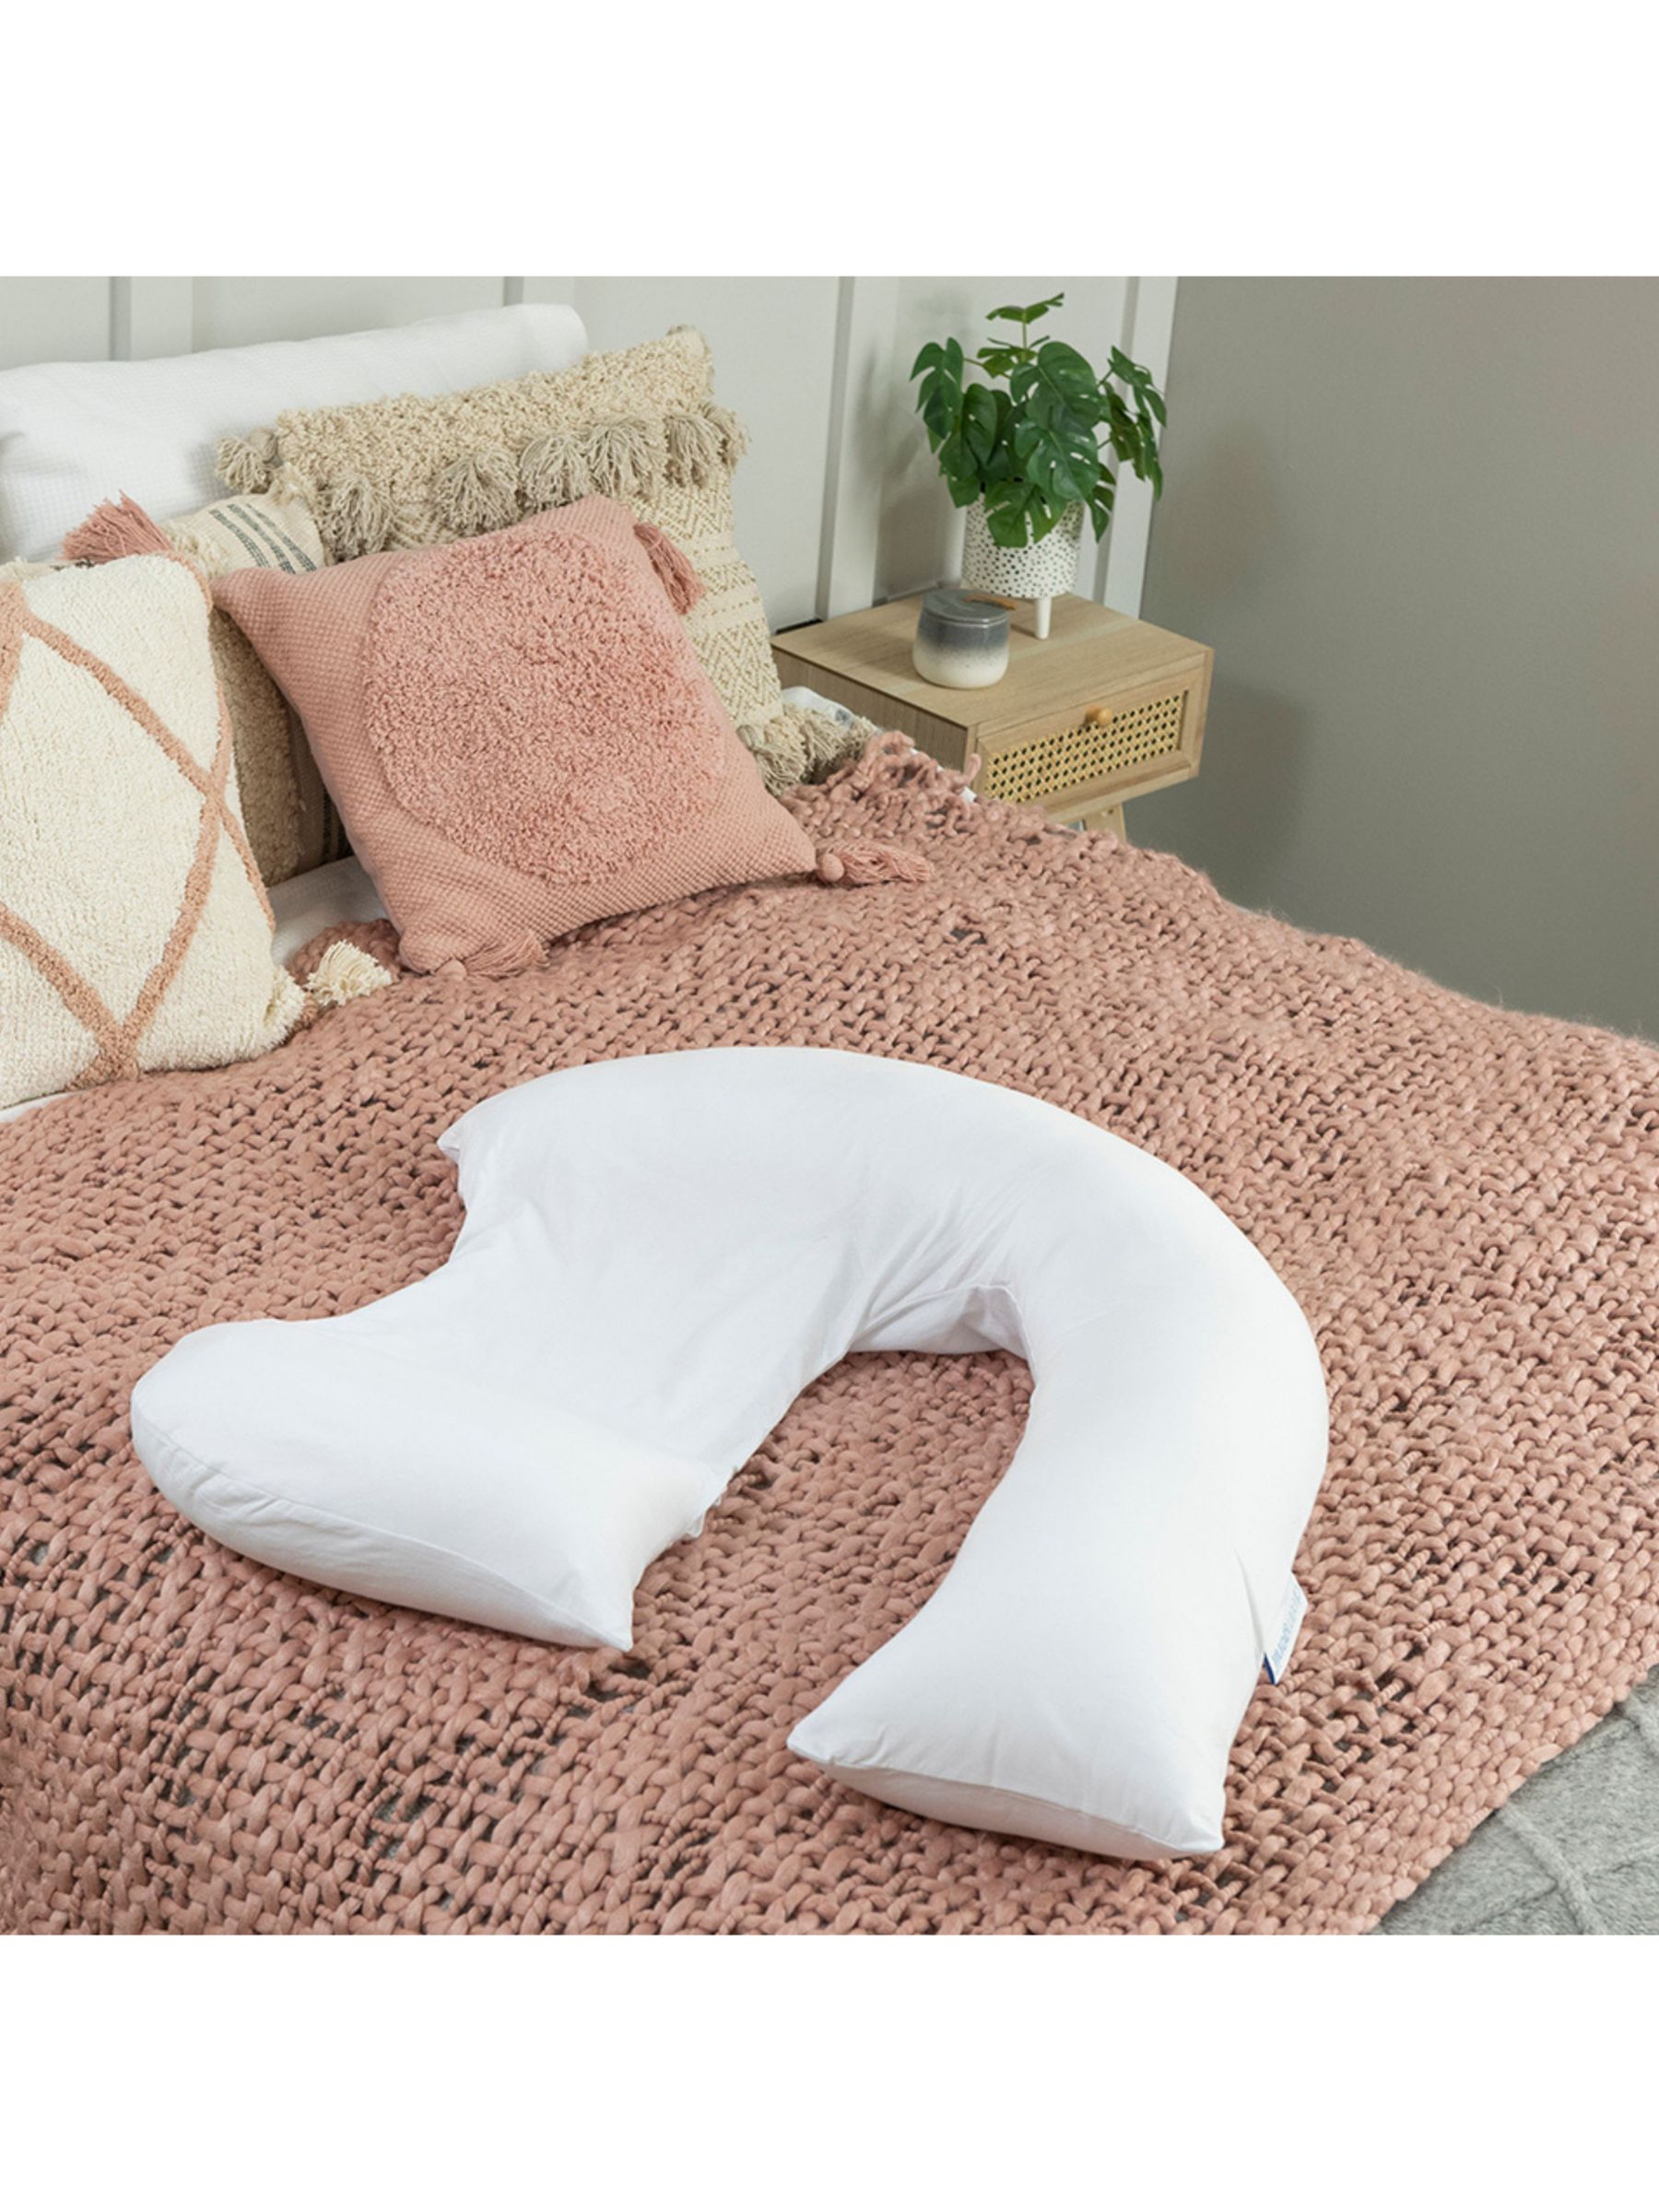 Dreamgenii Maternity And Nursing Pillow White At John Lewis